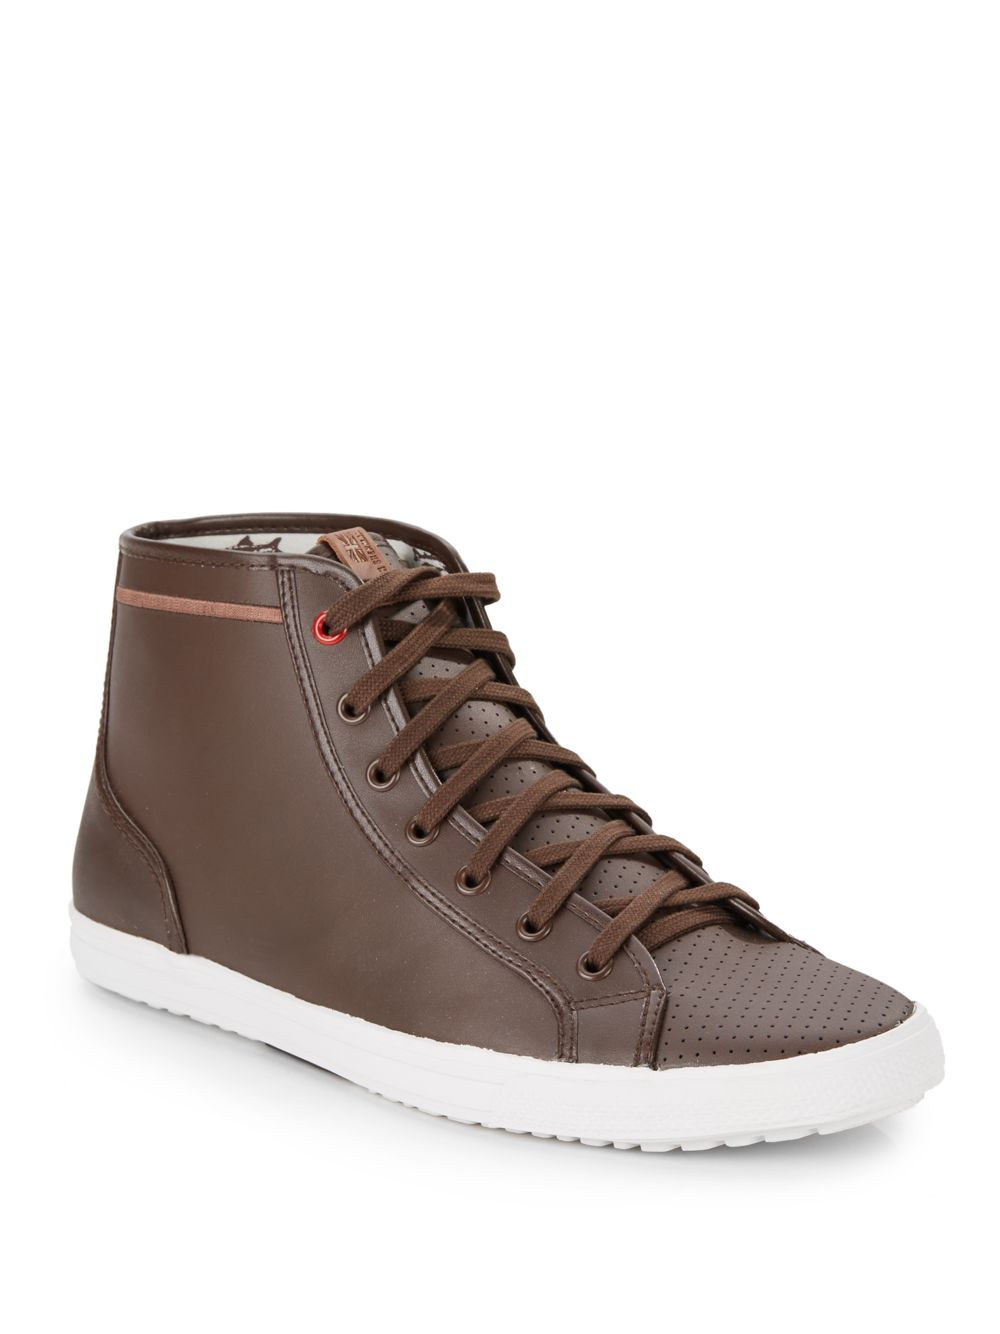 Ben Sherman Conall Perforated Leather Hi-Top Sneakers in Brown for Men ...